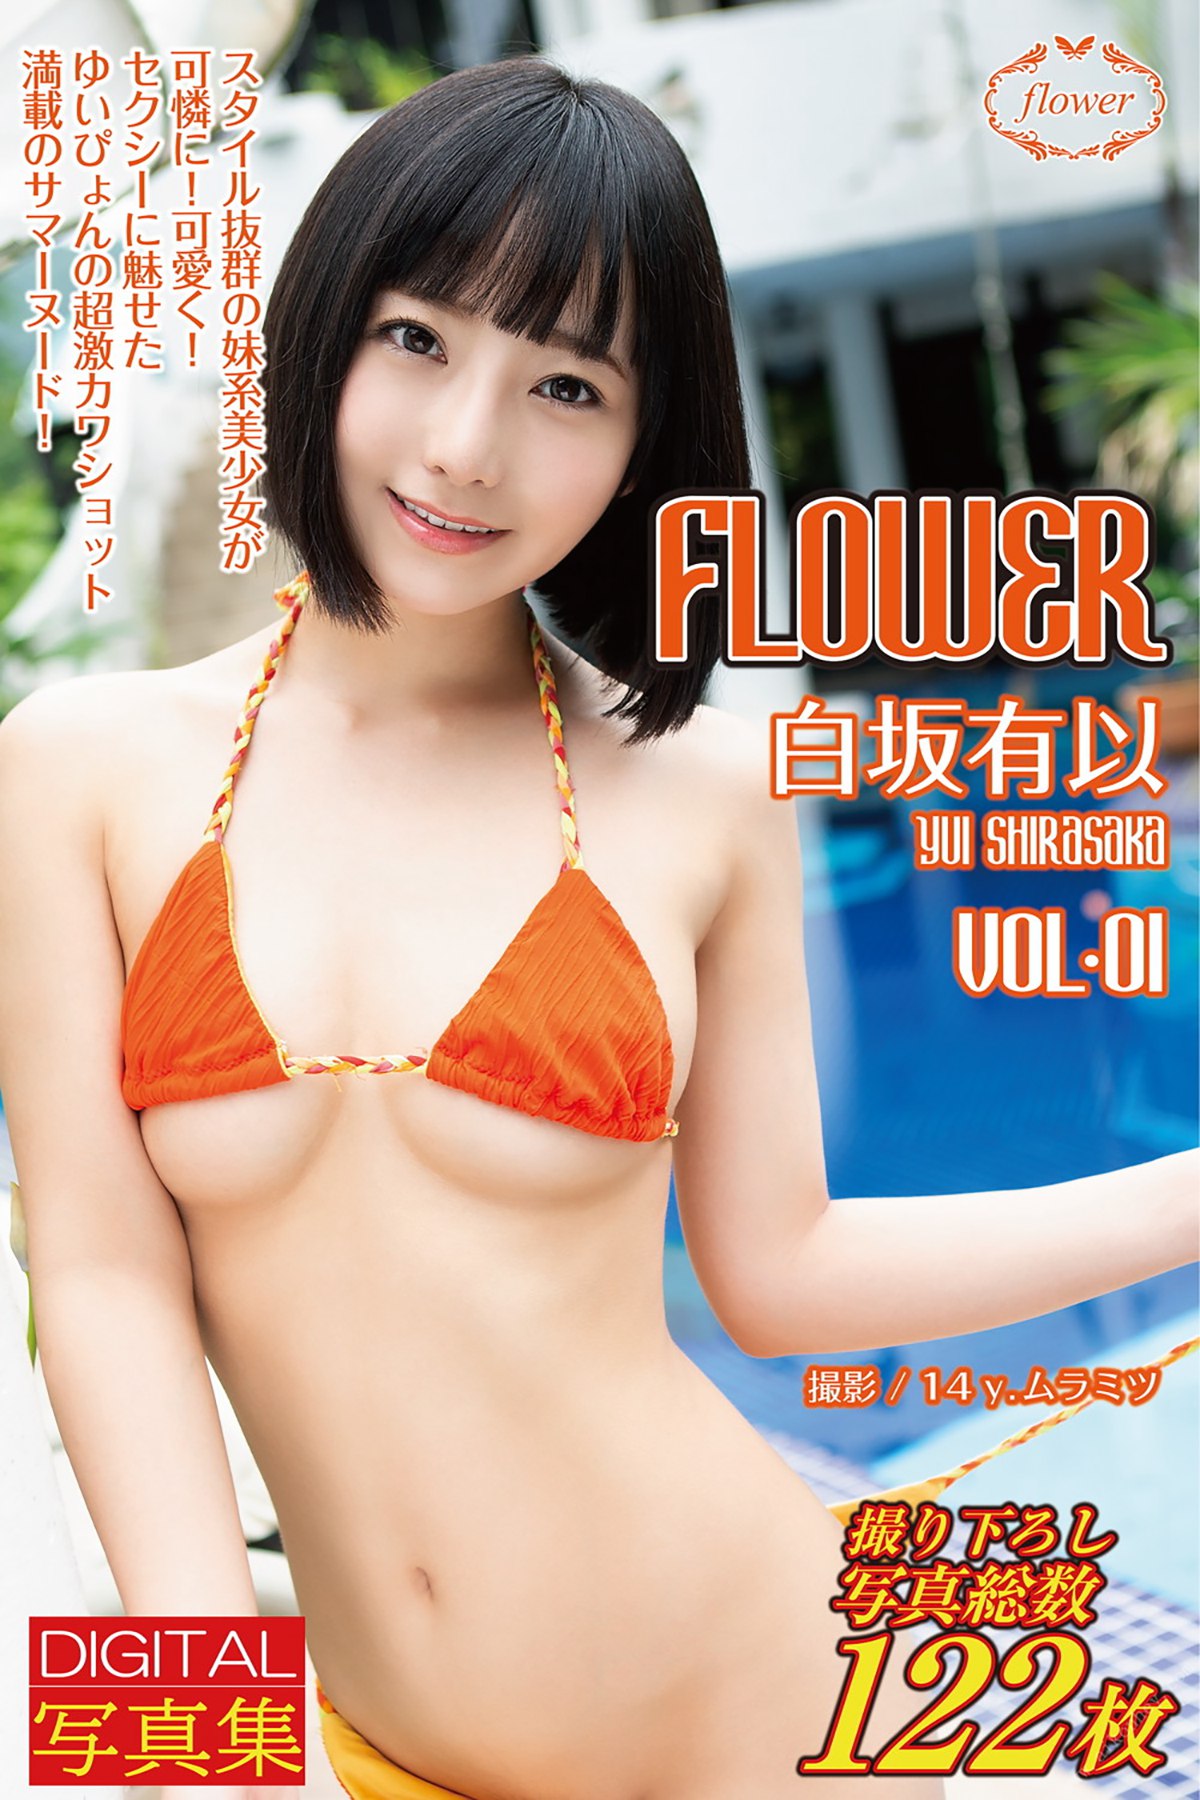 Photobook FLOWER Yui Shirasaka 白坂有以 Vol.01